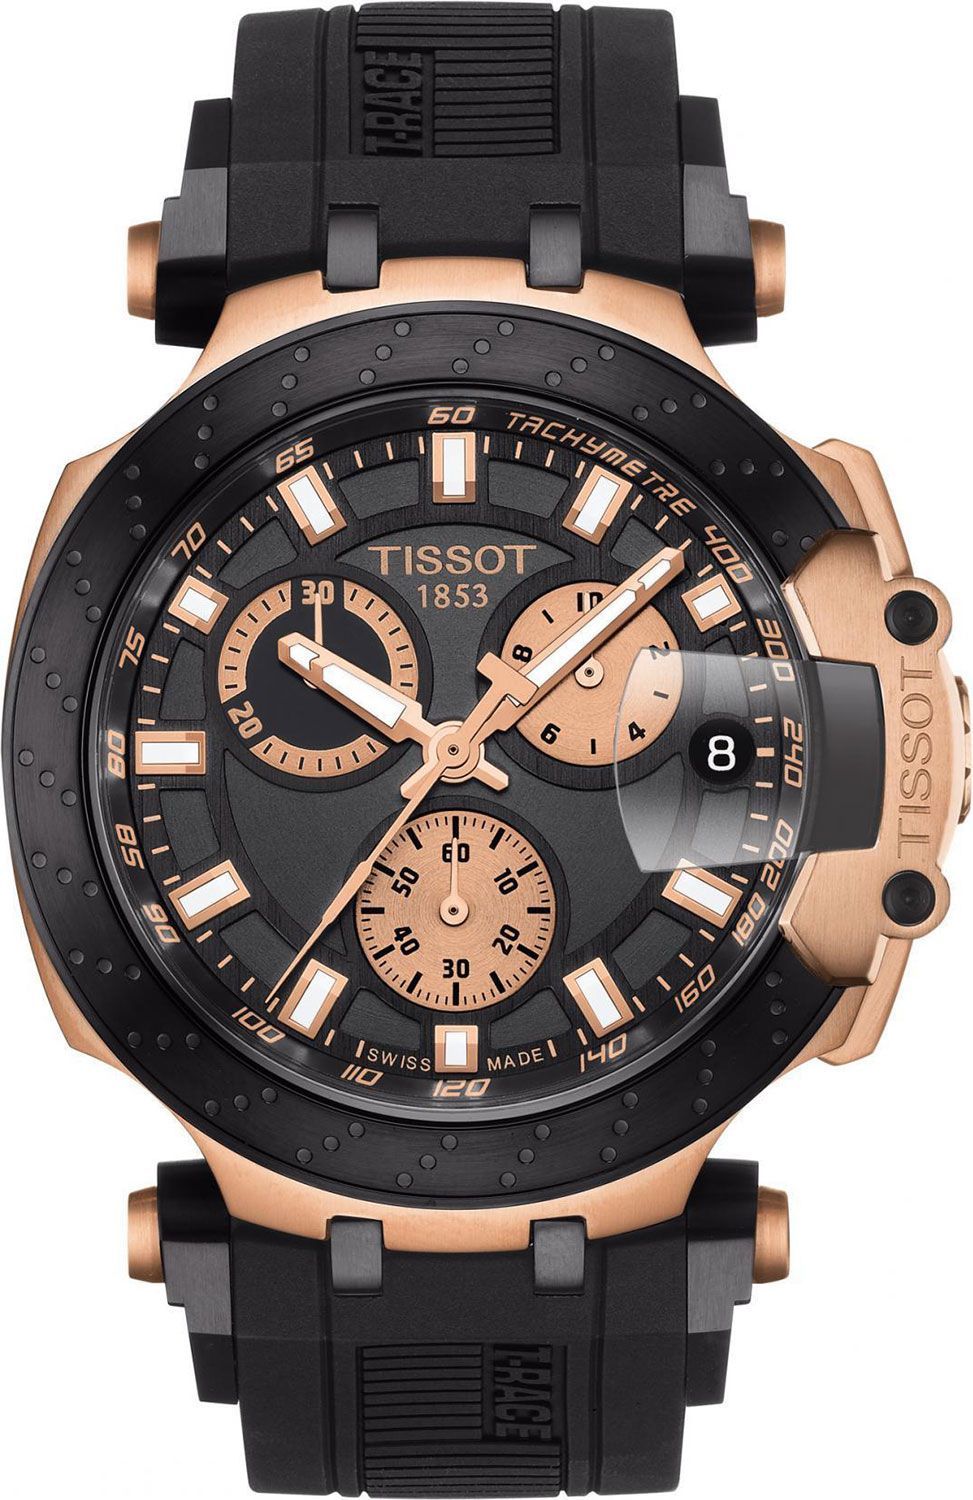 Tissot T-Sport Tissot T-Race Black Dial 43 mm Quartz Watch For Men - 1